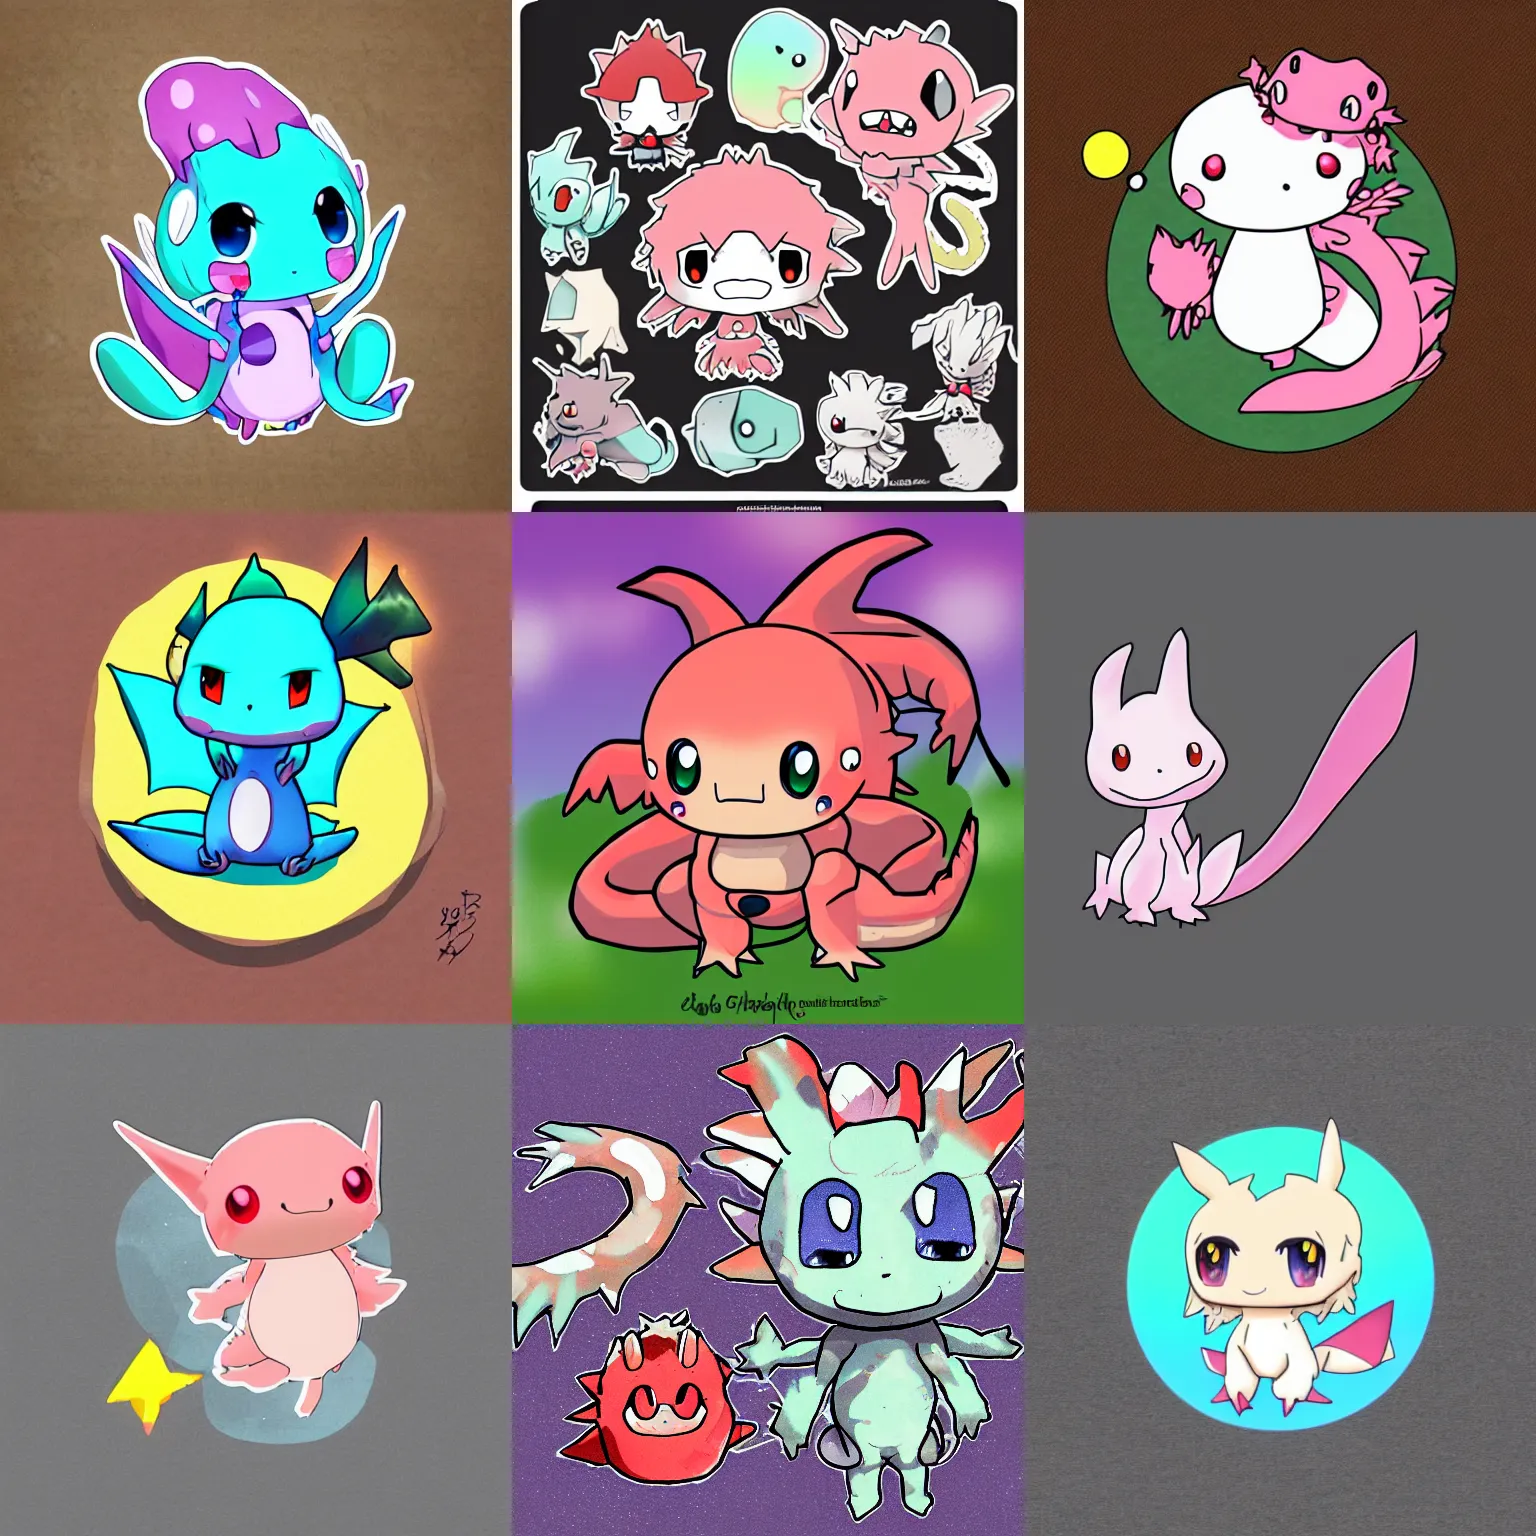 Prompt: anime chibi baby axolotl dragon, DigiToonz, Pokémon